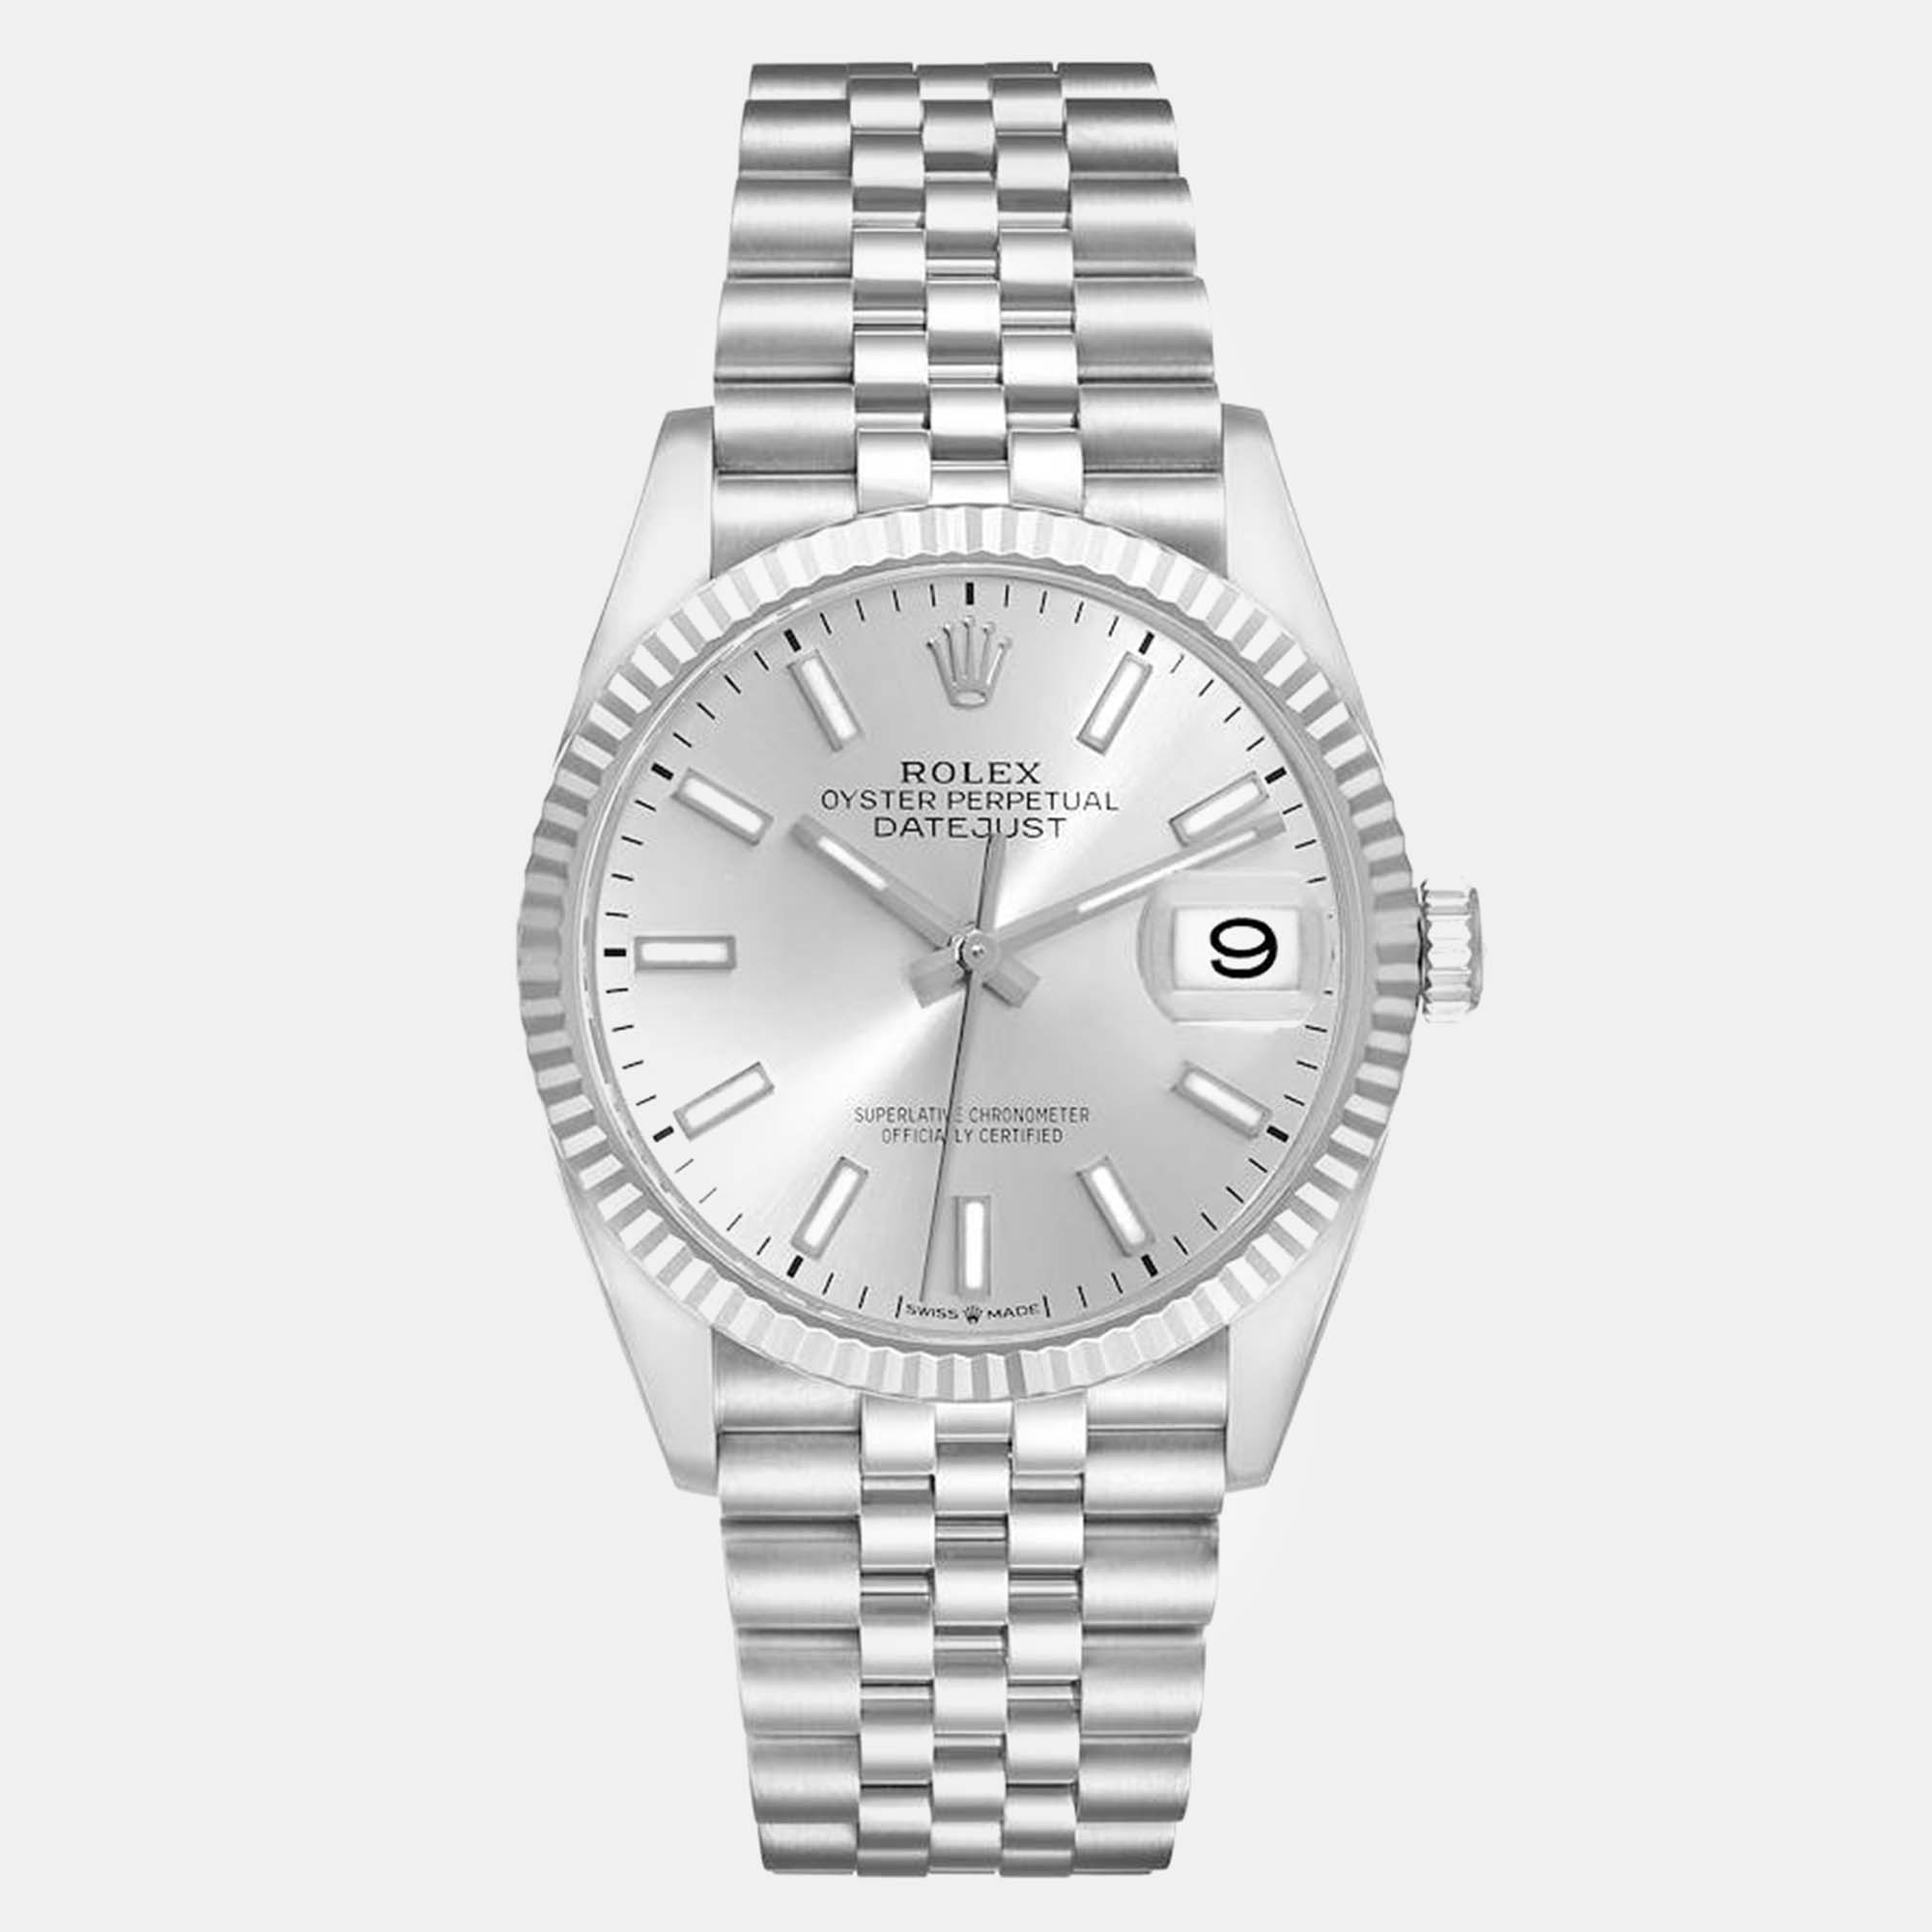 Rolex datejust steel white gold silver dial men's watch 36 mm